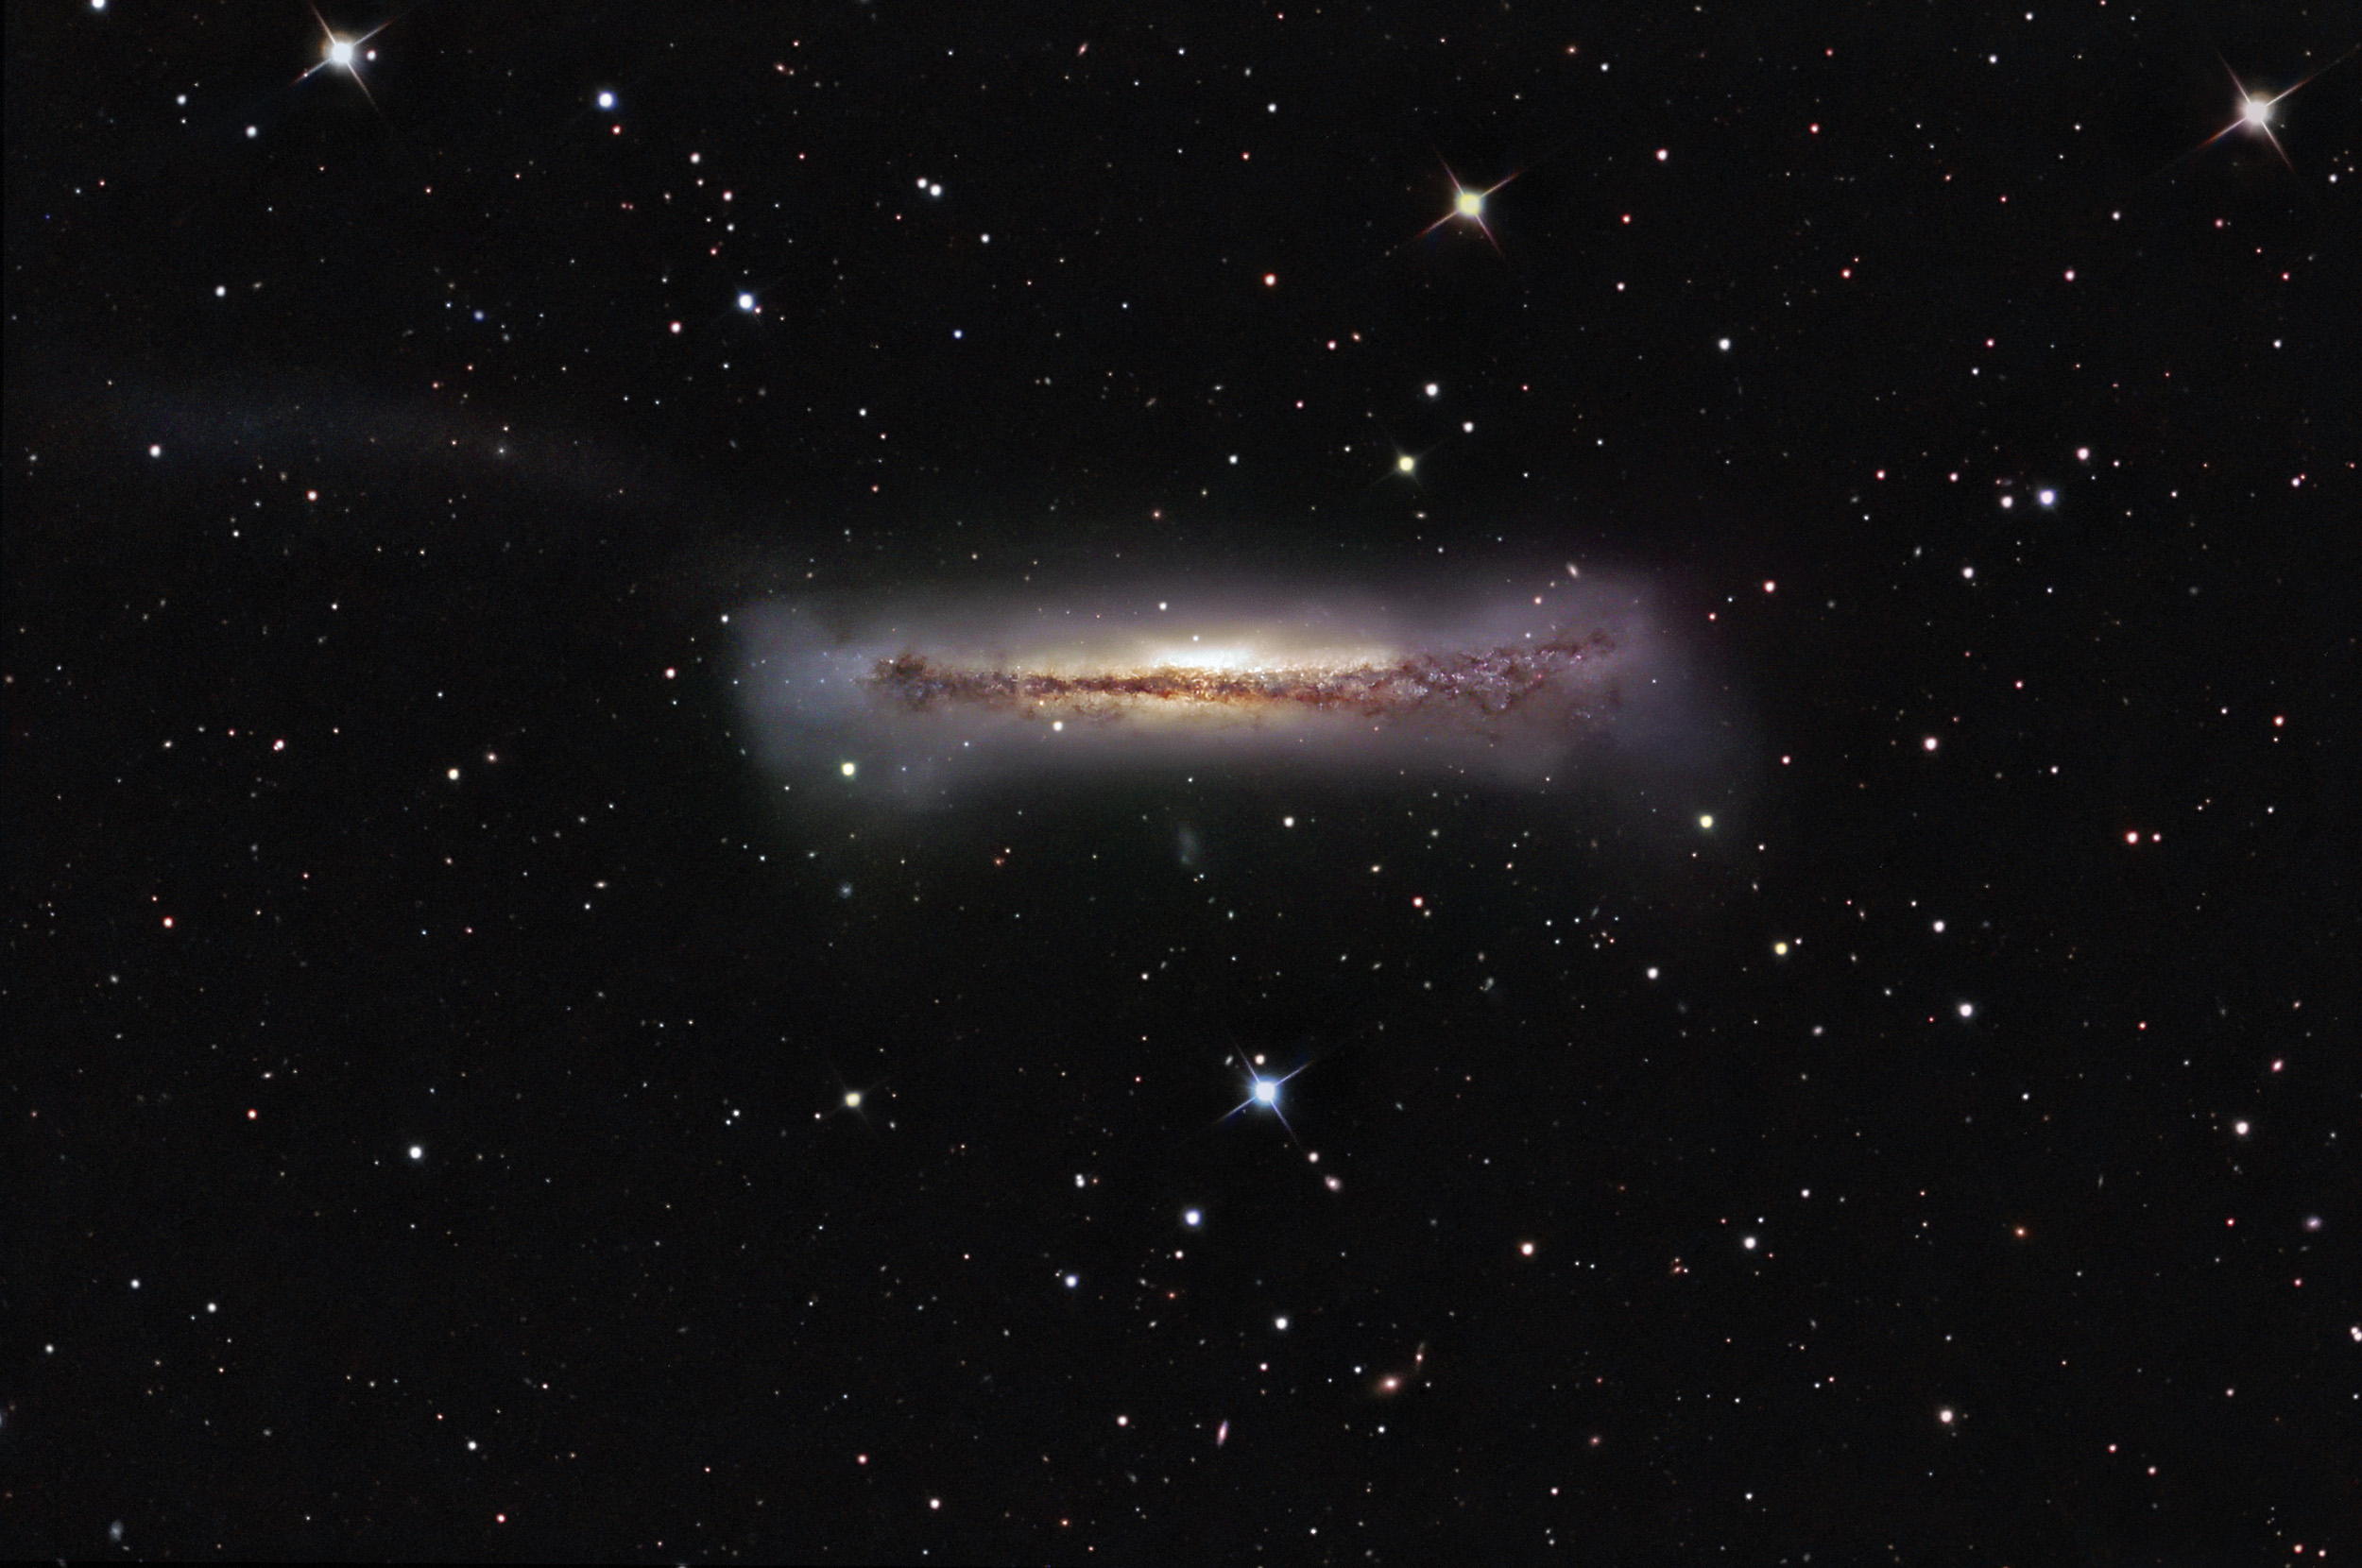 NGC3628 in Leo